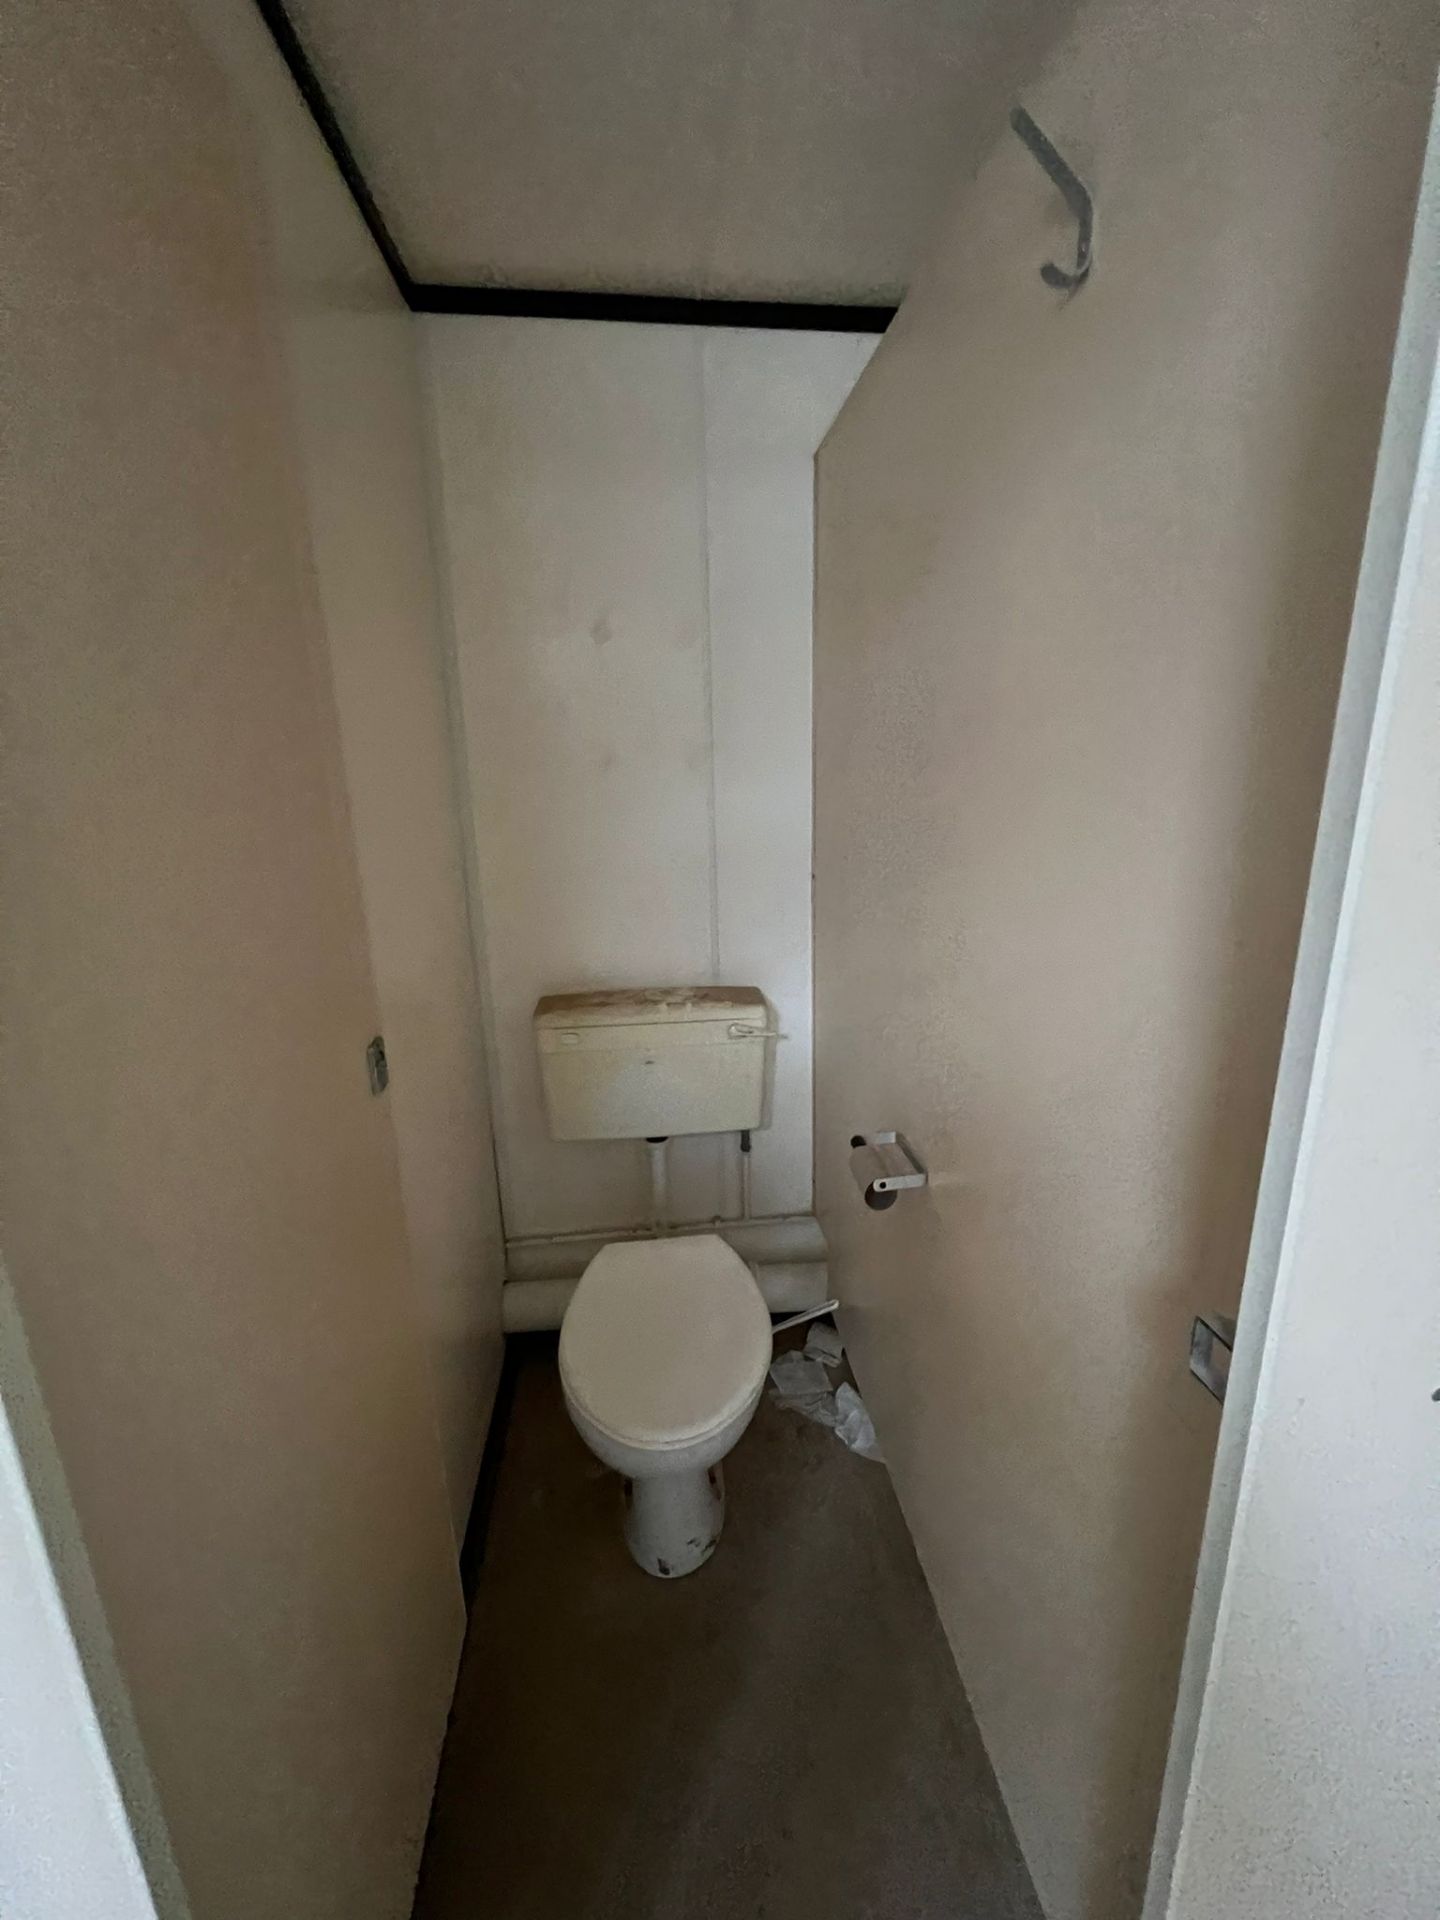 2 + 1 male female toilet block - Image 3 of 11